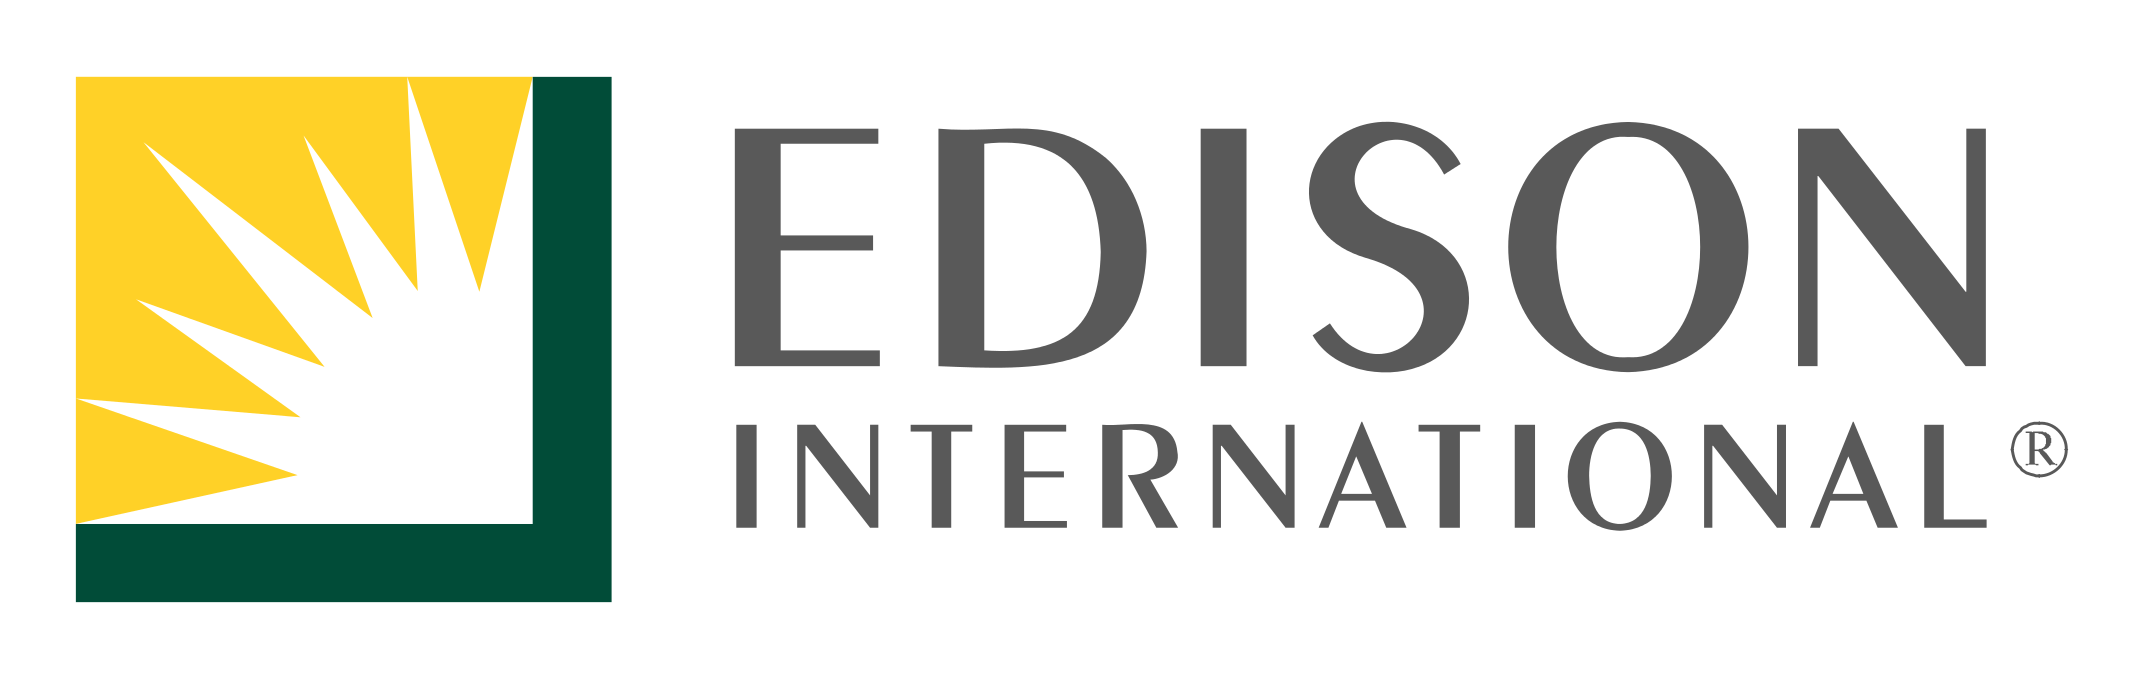 Edison International Logo PNG Image